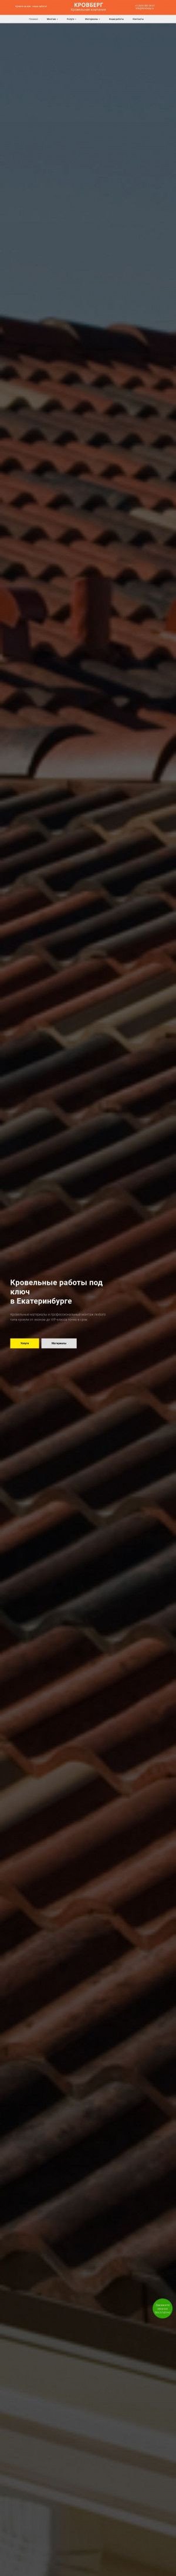 Предпросмотр для krovberg.ru — Кровберг